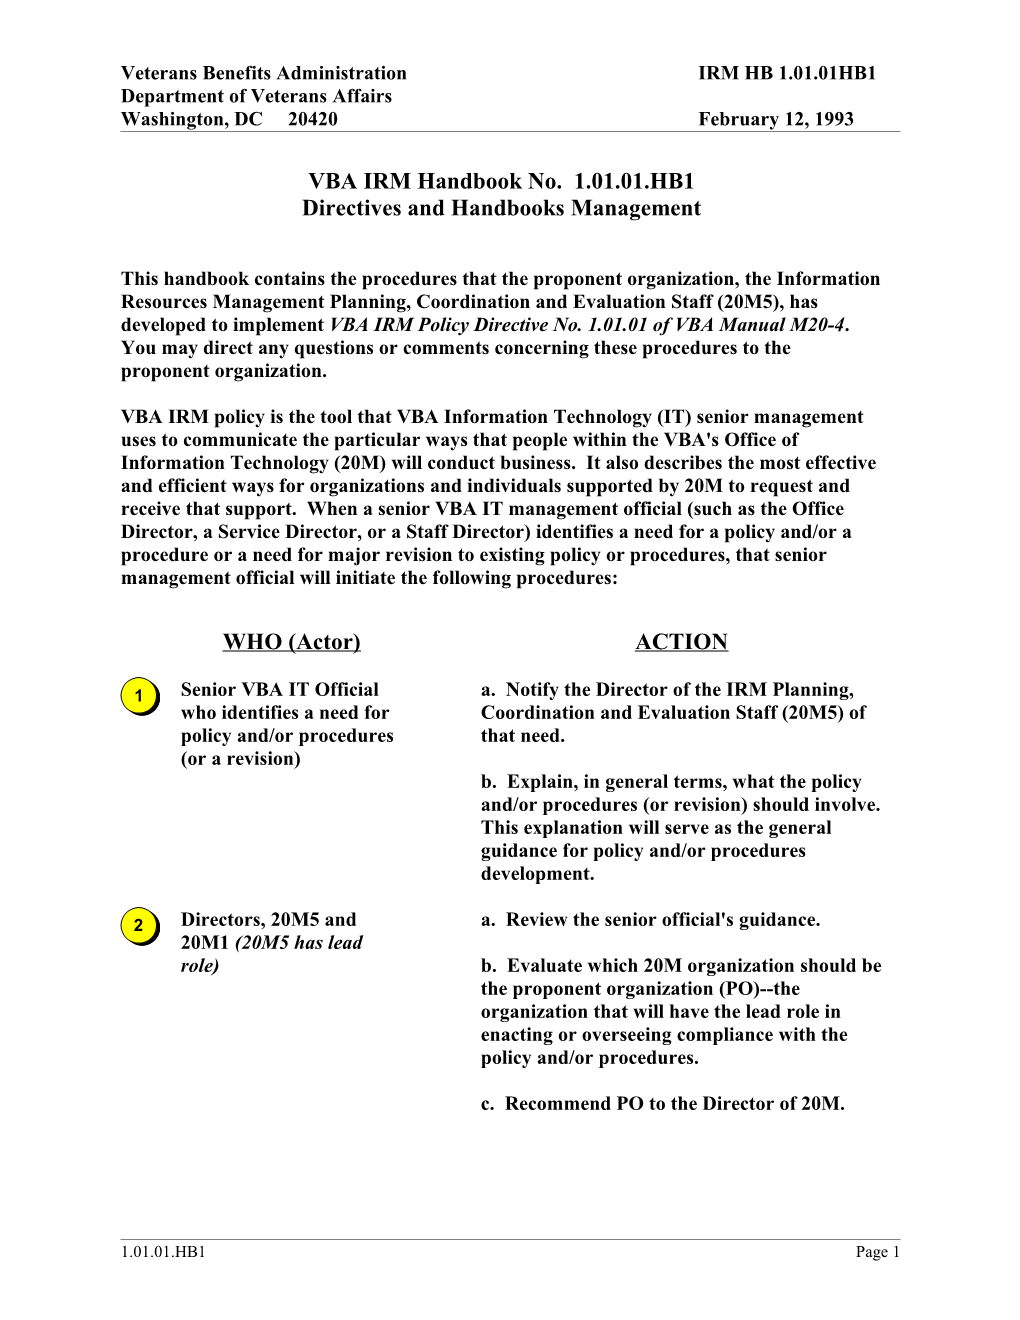 VBA IRM Handbook No. 1.01.01.HB1